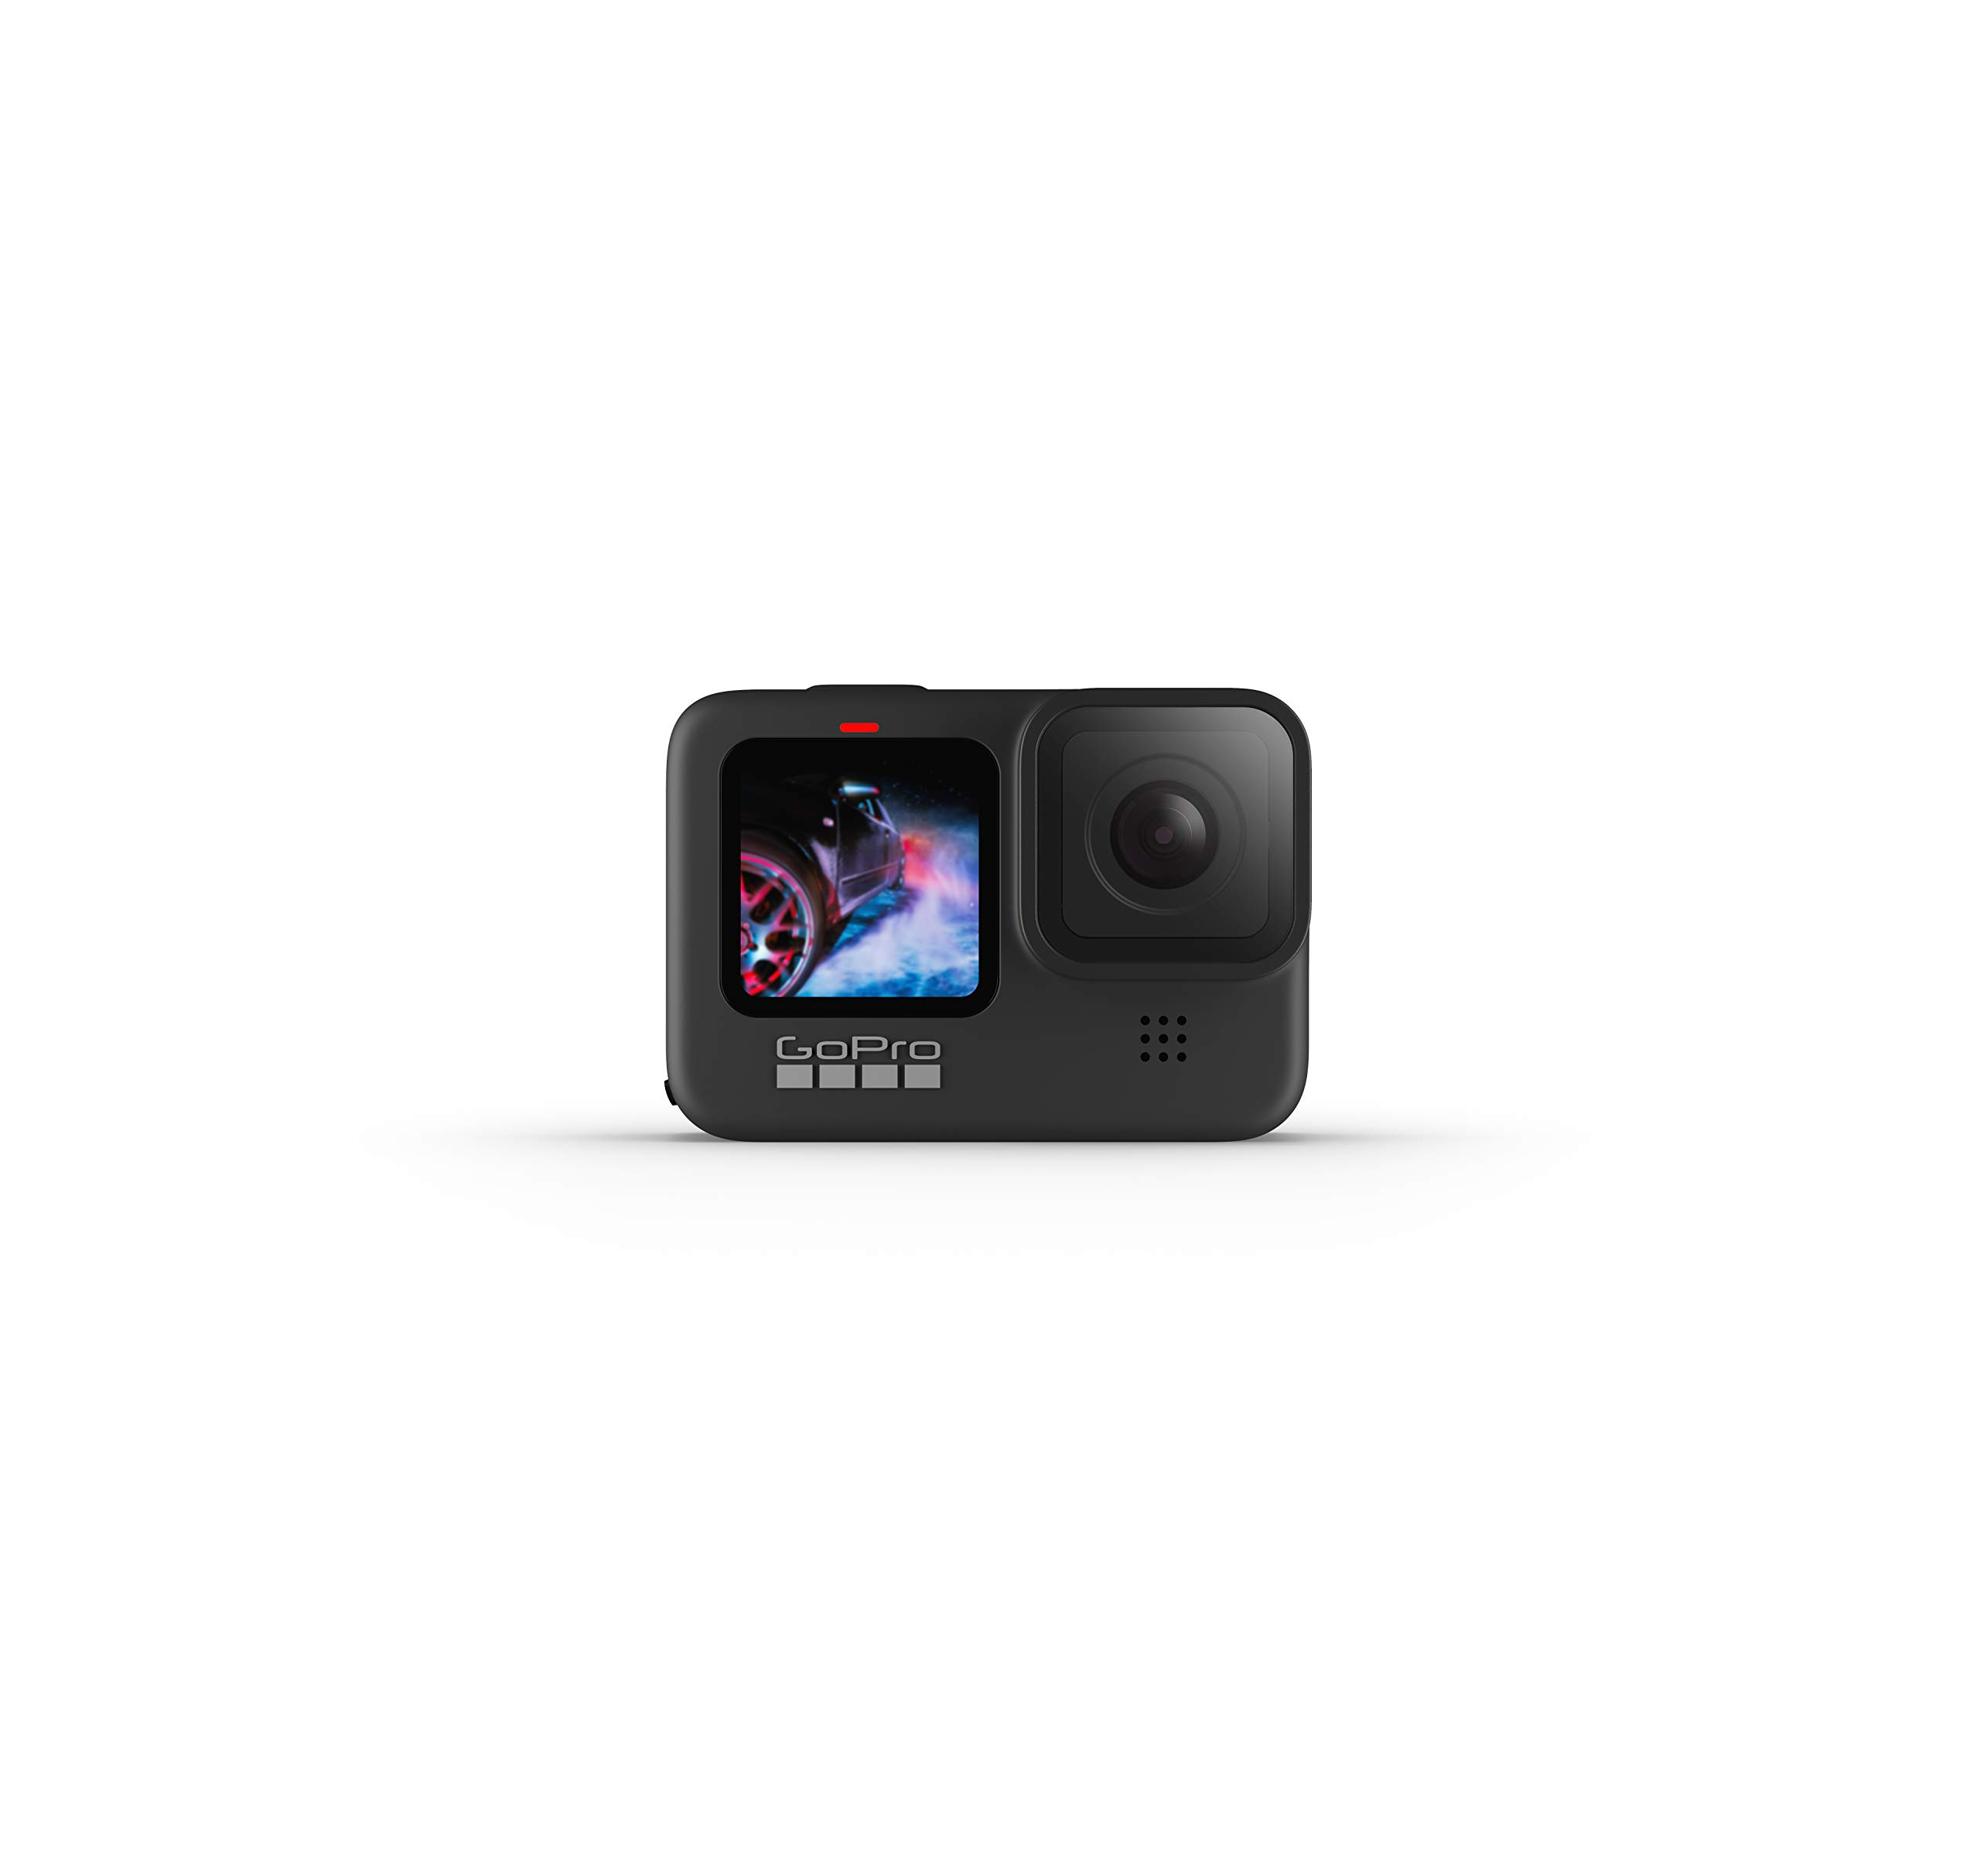  GoPro HERO9 Black - フロント LCD およびタッチリア スクリーン付き防水アクション カメラ、5K Ultra HD ビデオ、20MP 写真、1080p ライブ ストリーミング、ウ...